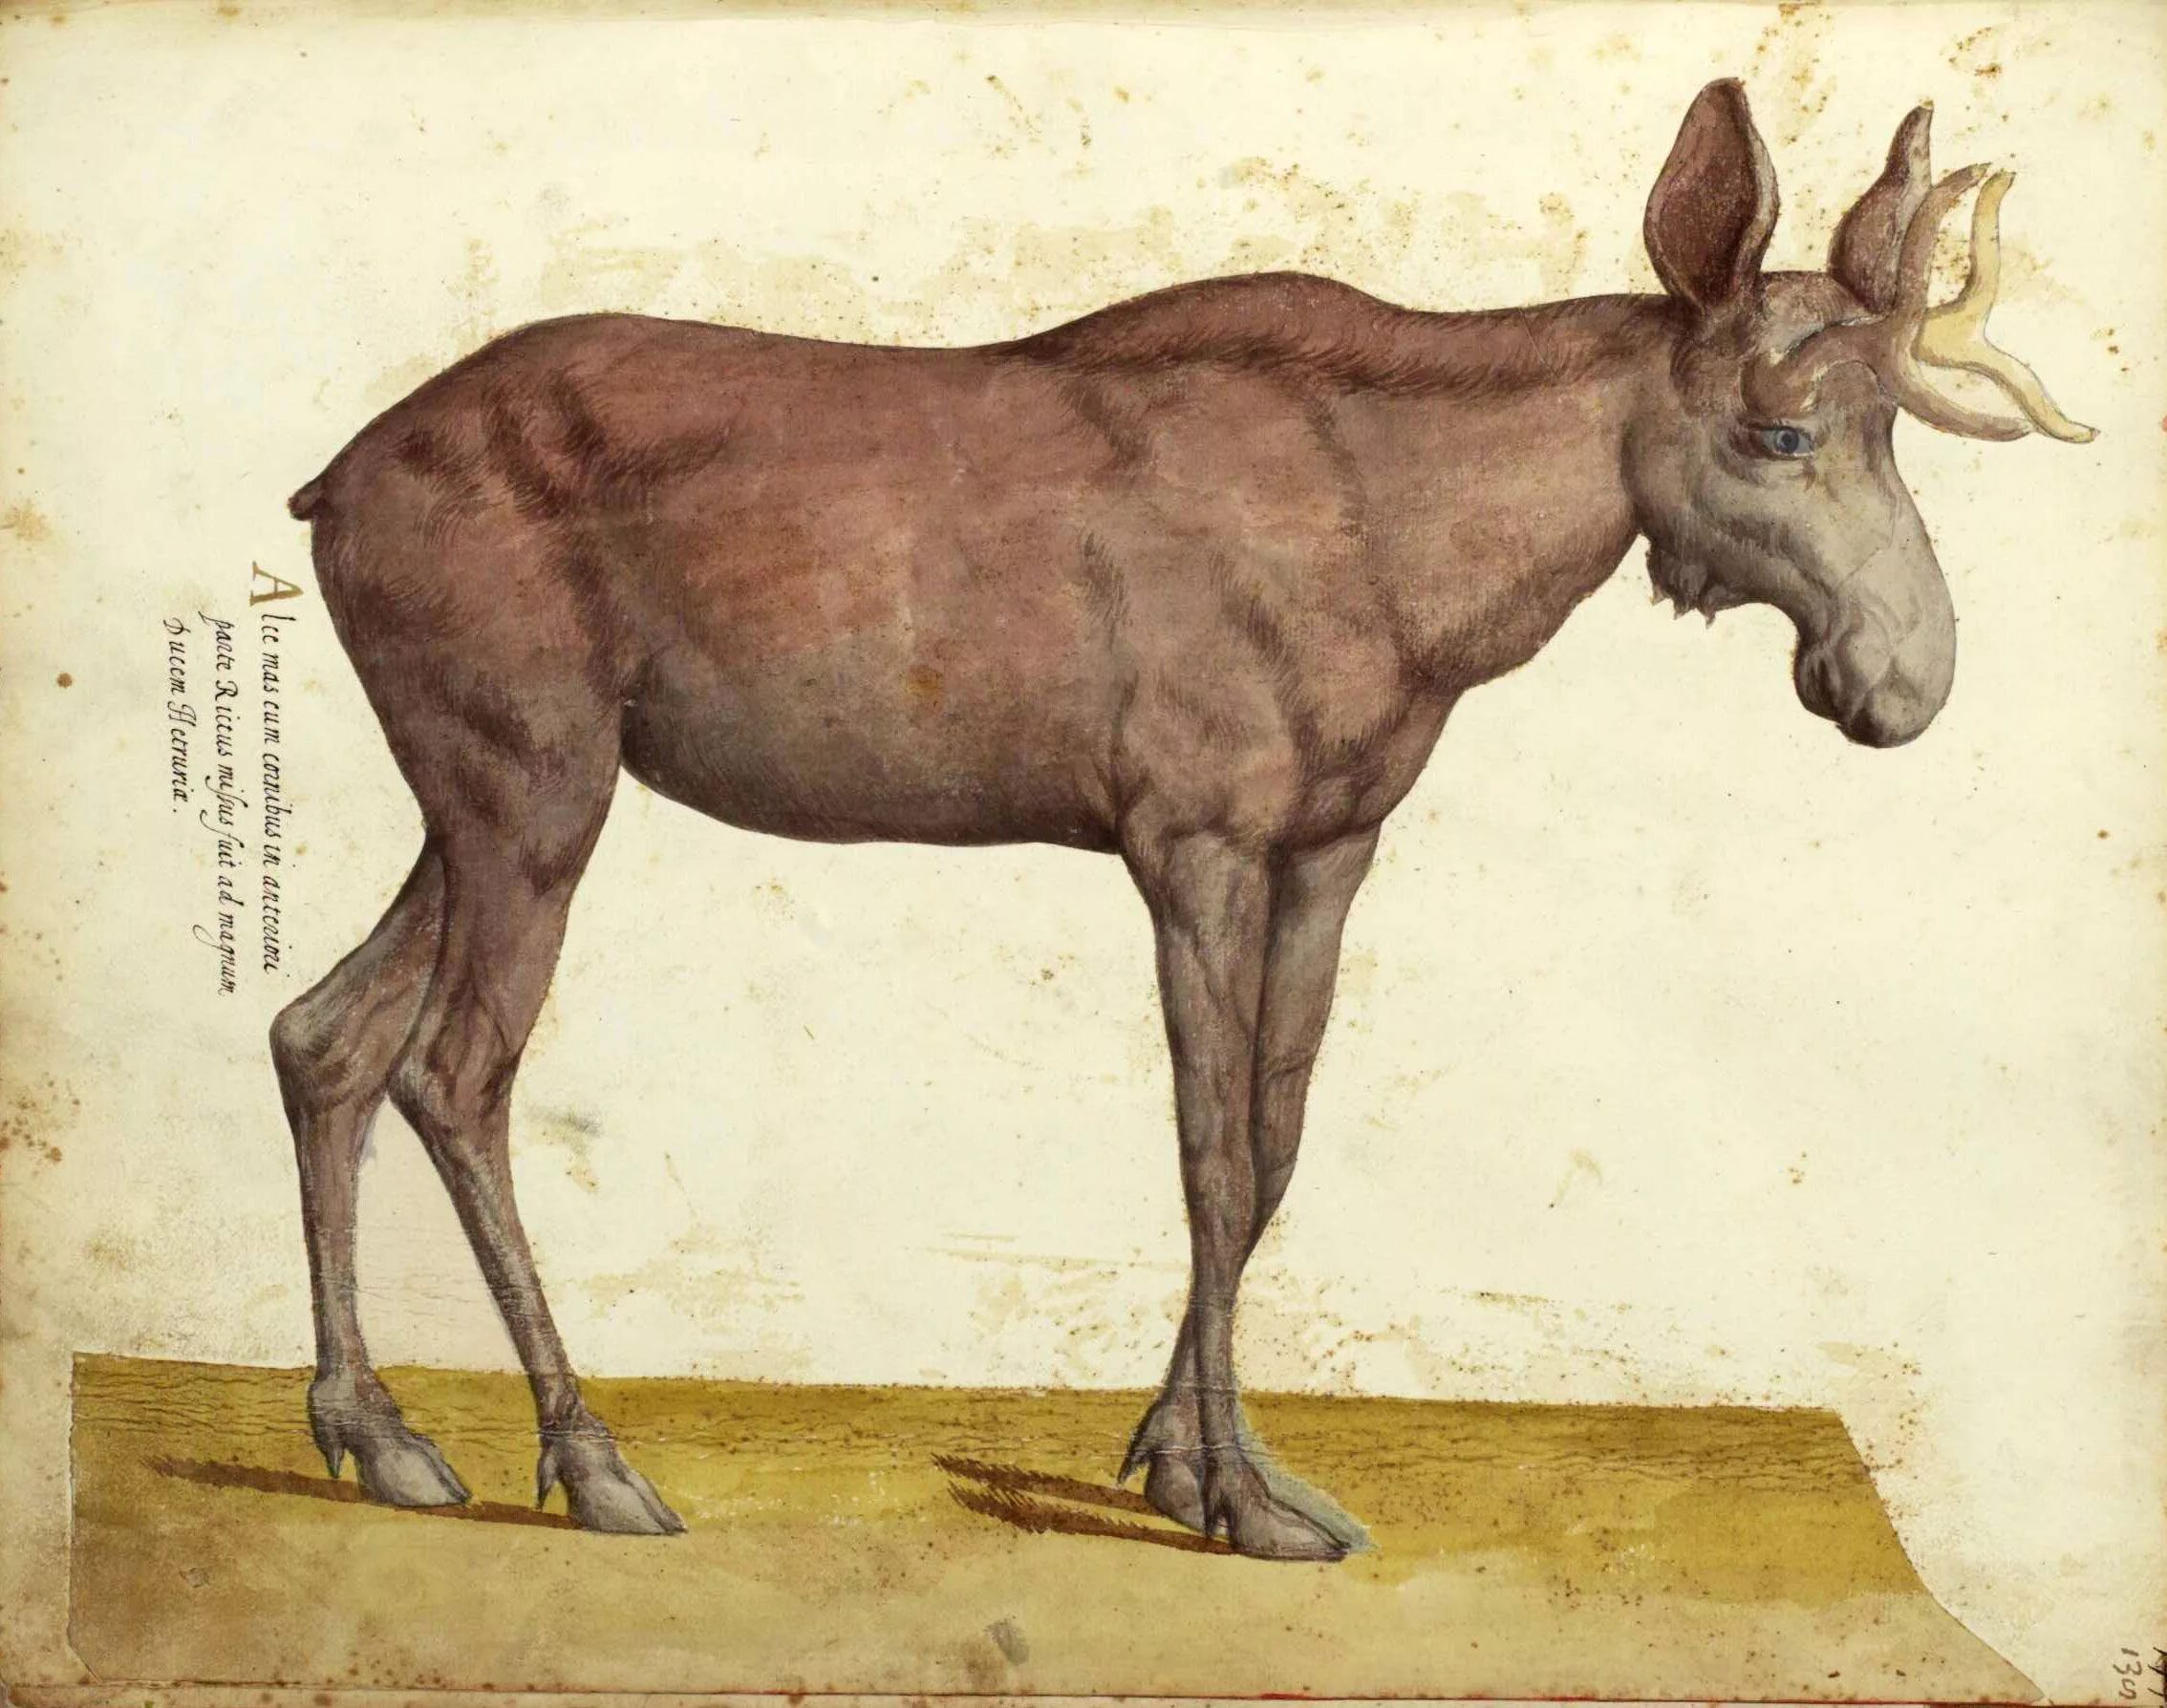 Animal johns. Улиссе Альдрованди 1522-1605. Джон животное. Vlyfsis Aldrouandi.